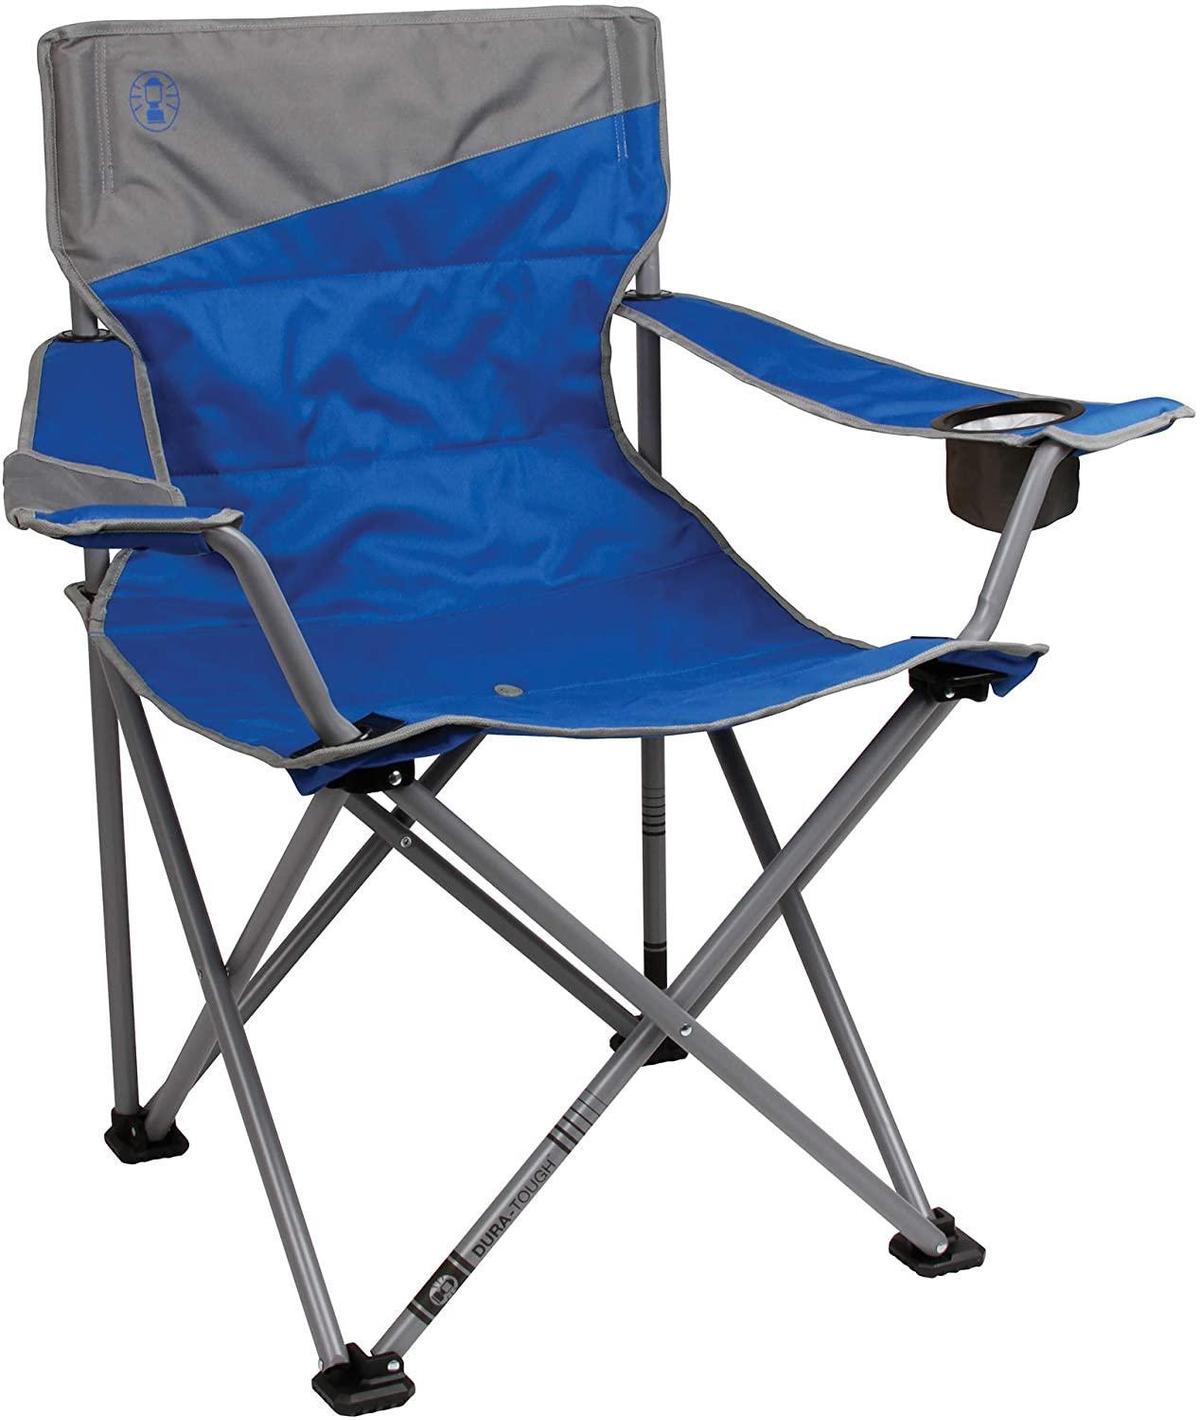 Coleman Big-N-Tall Quad Camping Chair, Blue - $41.19 MSRP